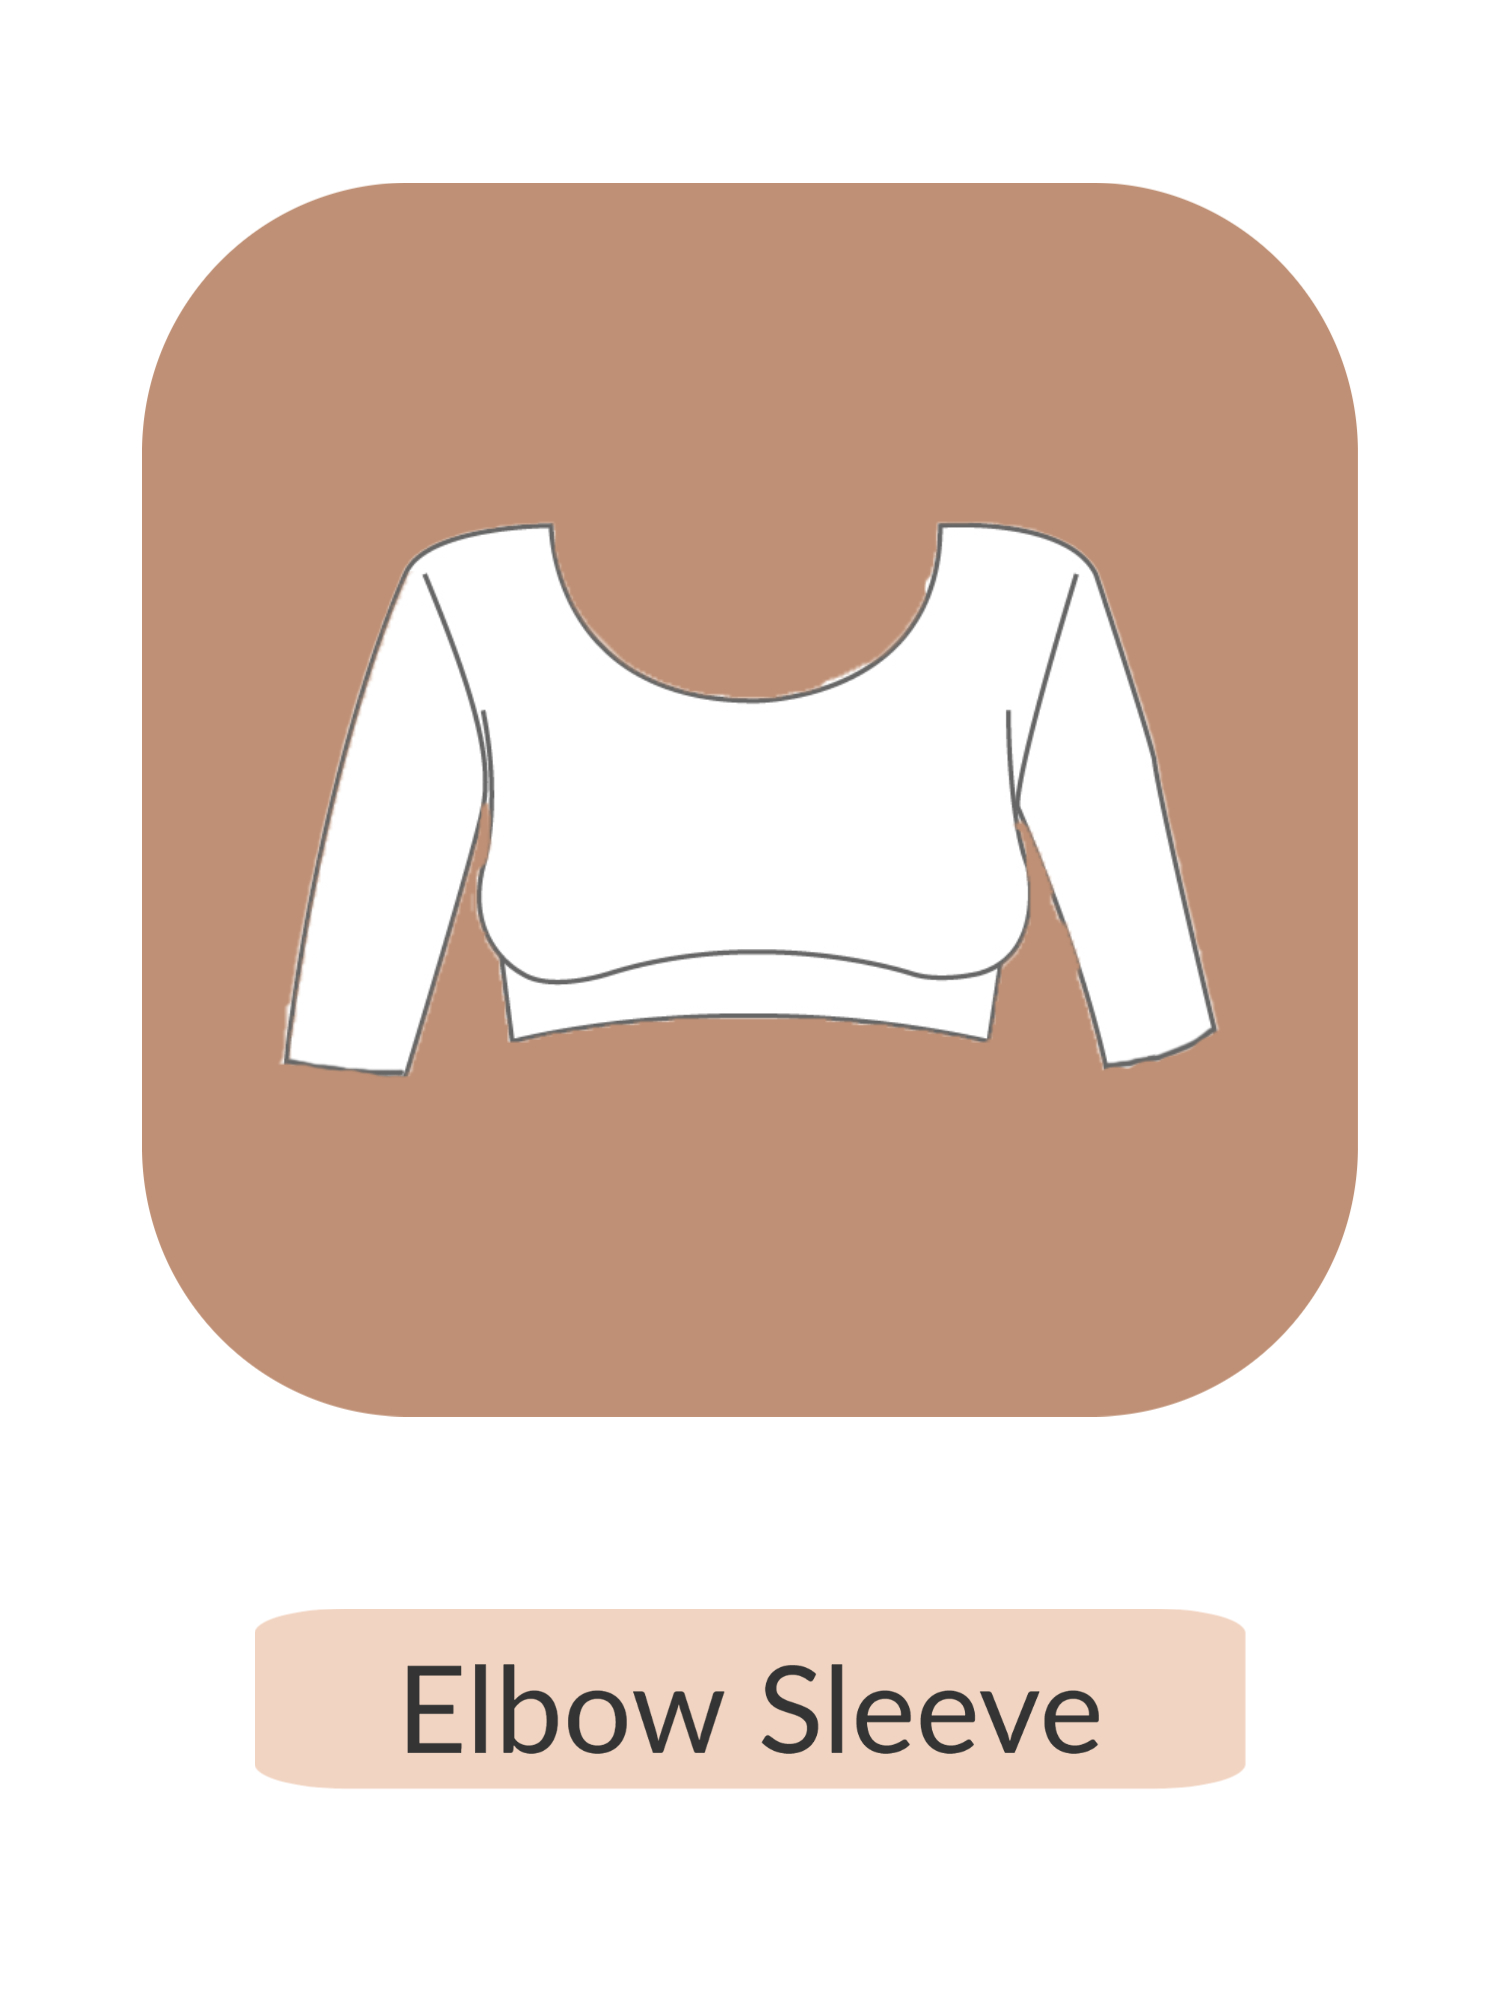 White sleeveless bra top with text 'Elbow Sleeve' on it.